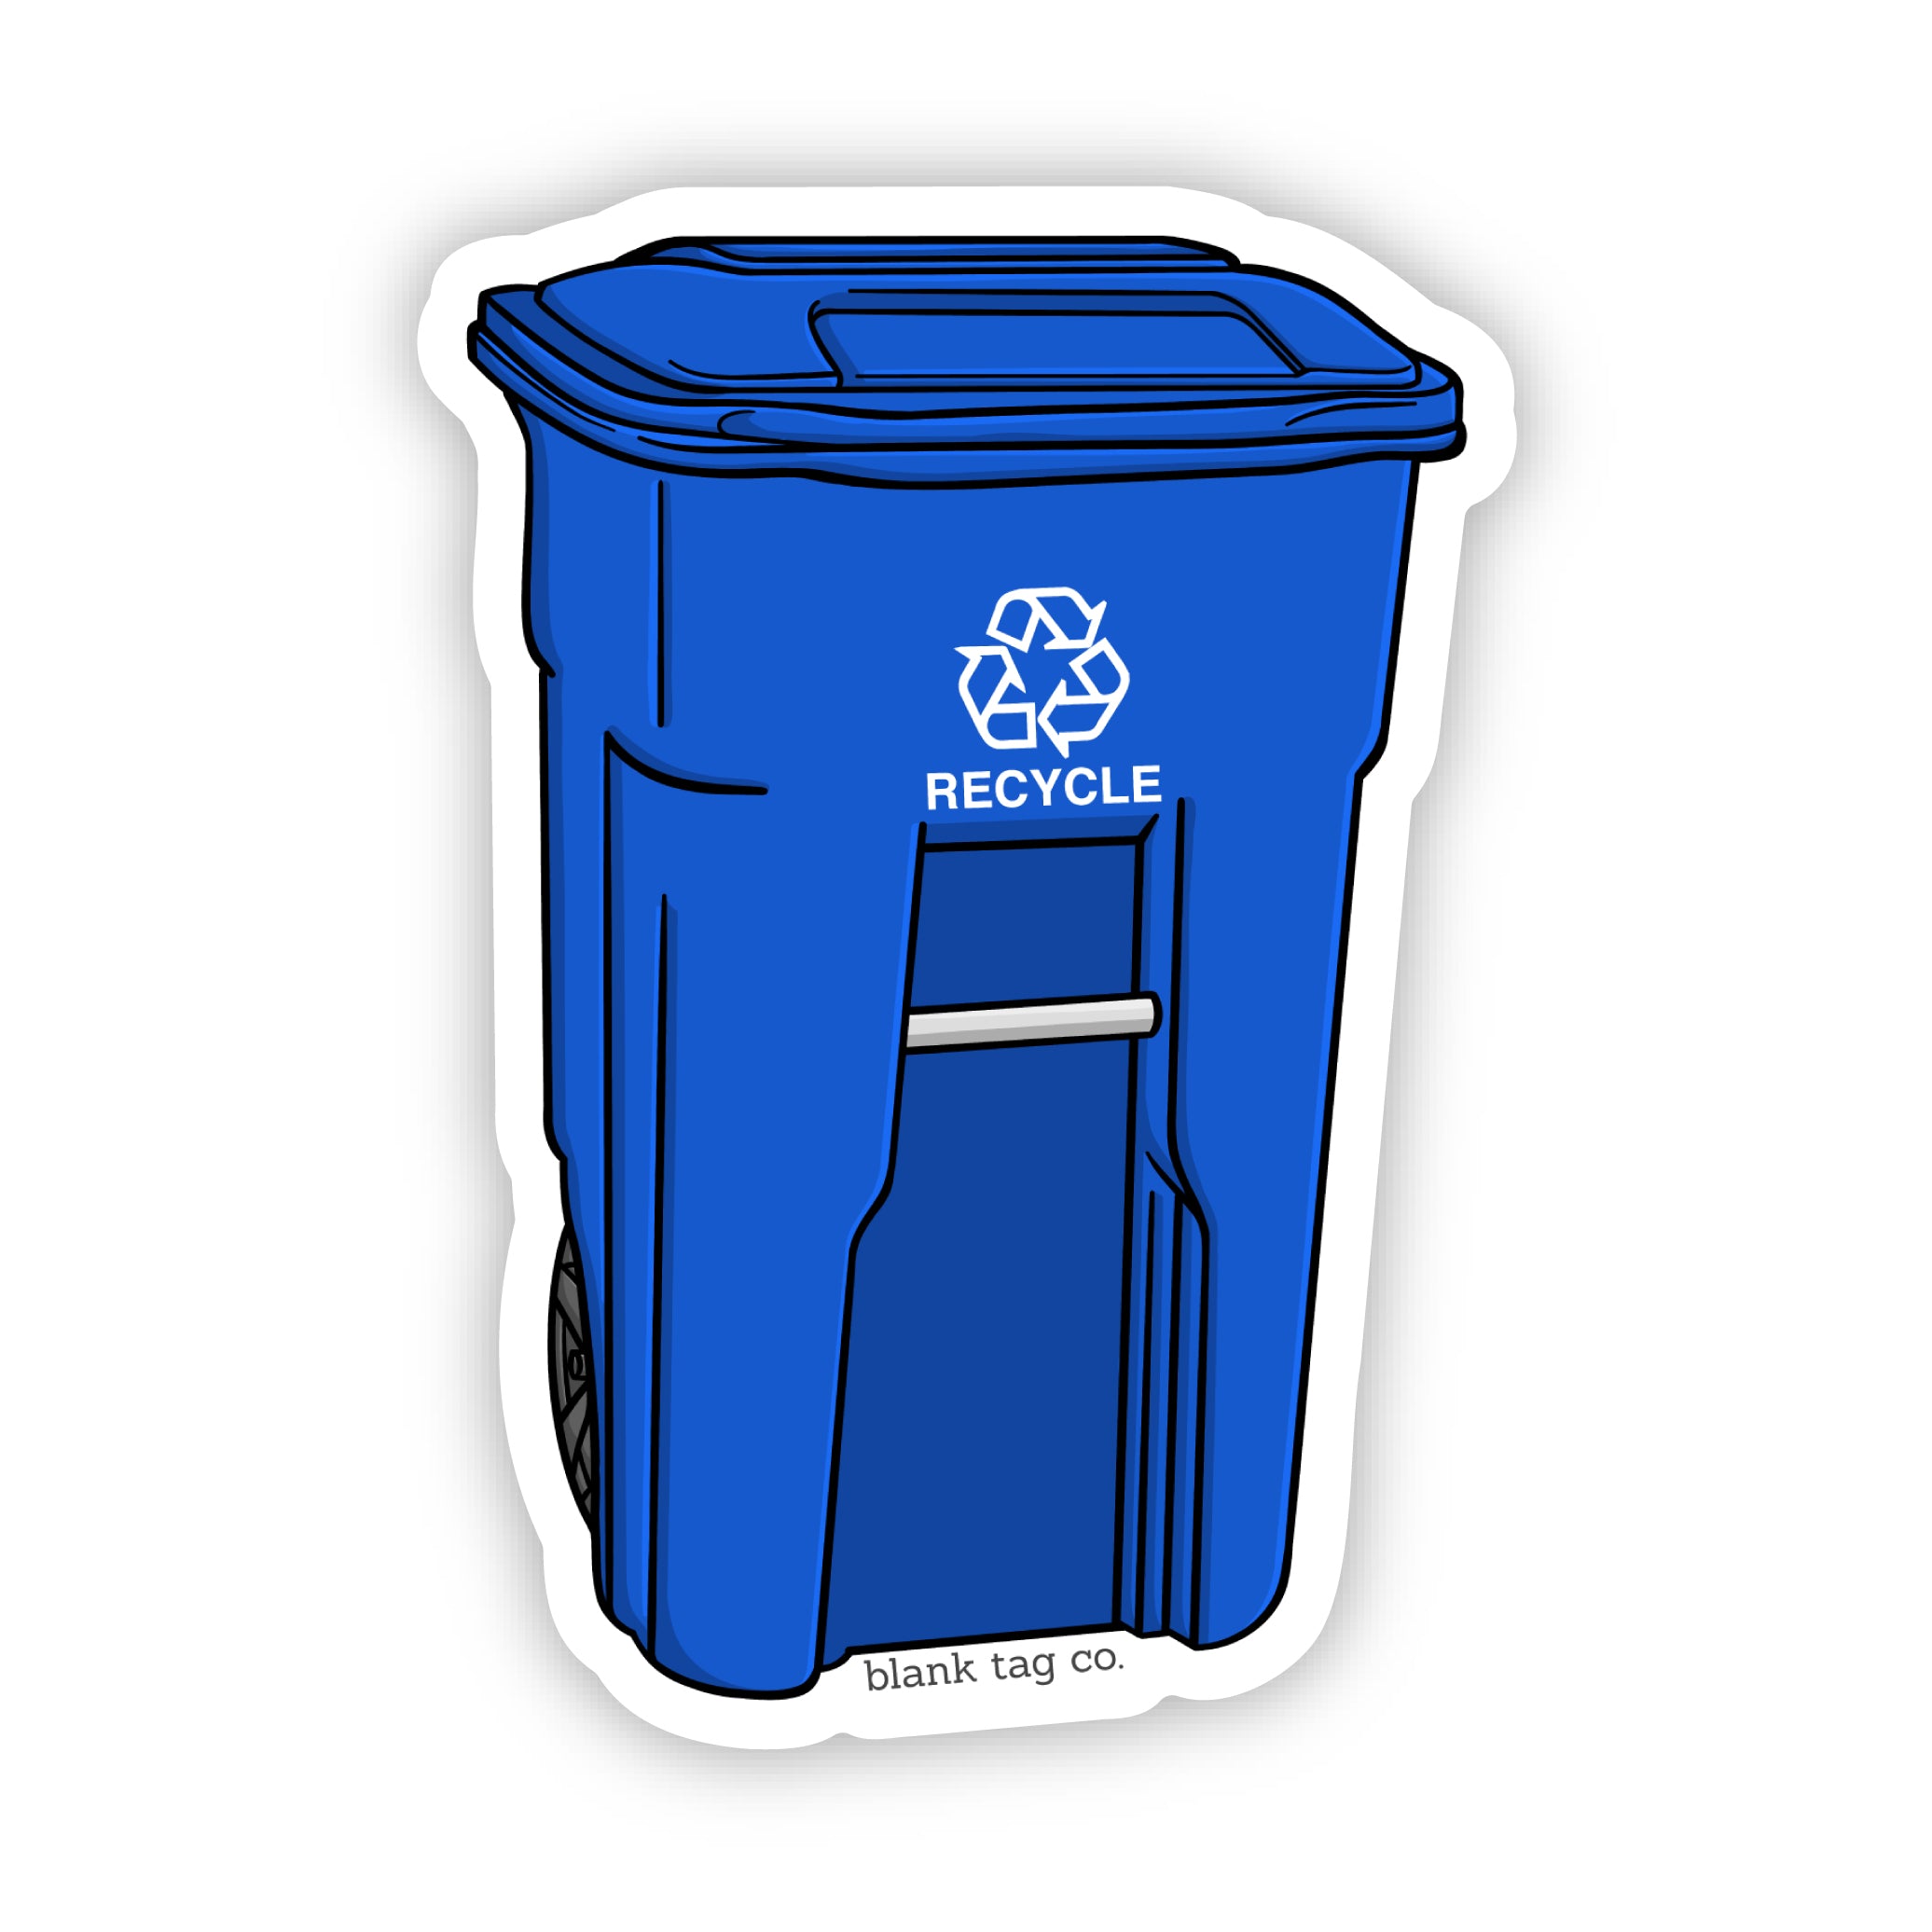 The Recycling Bin Sticker